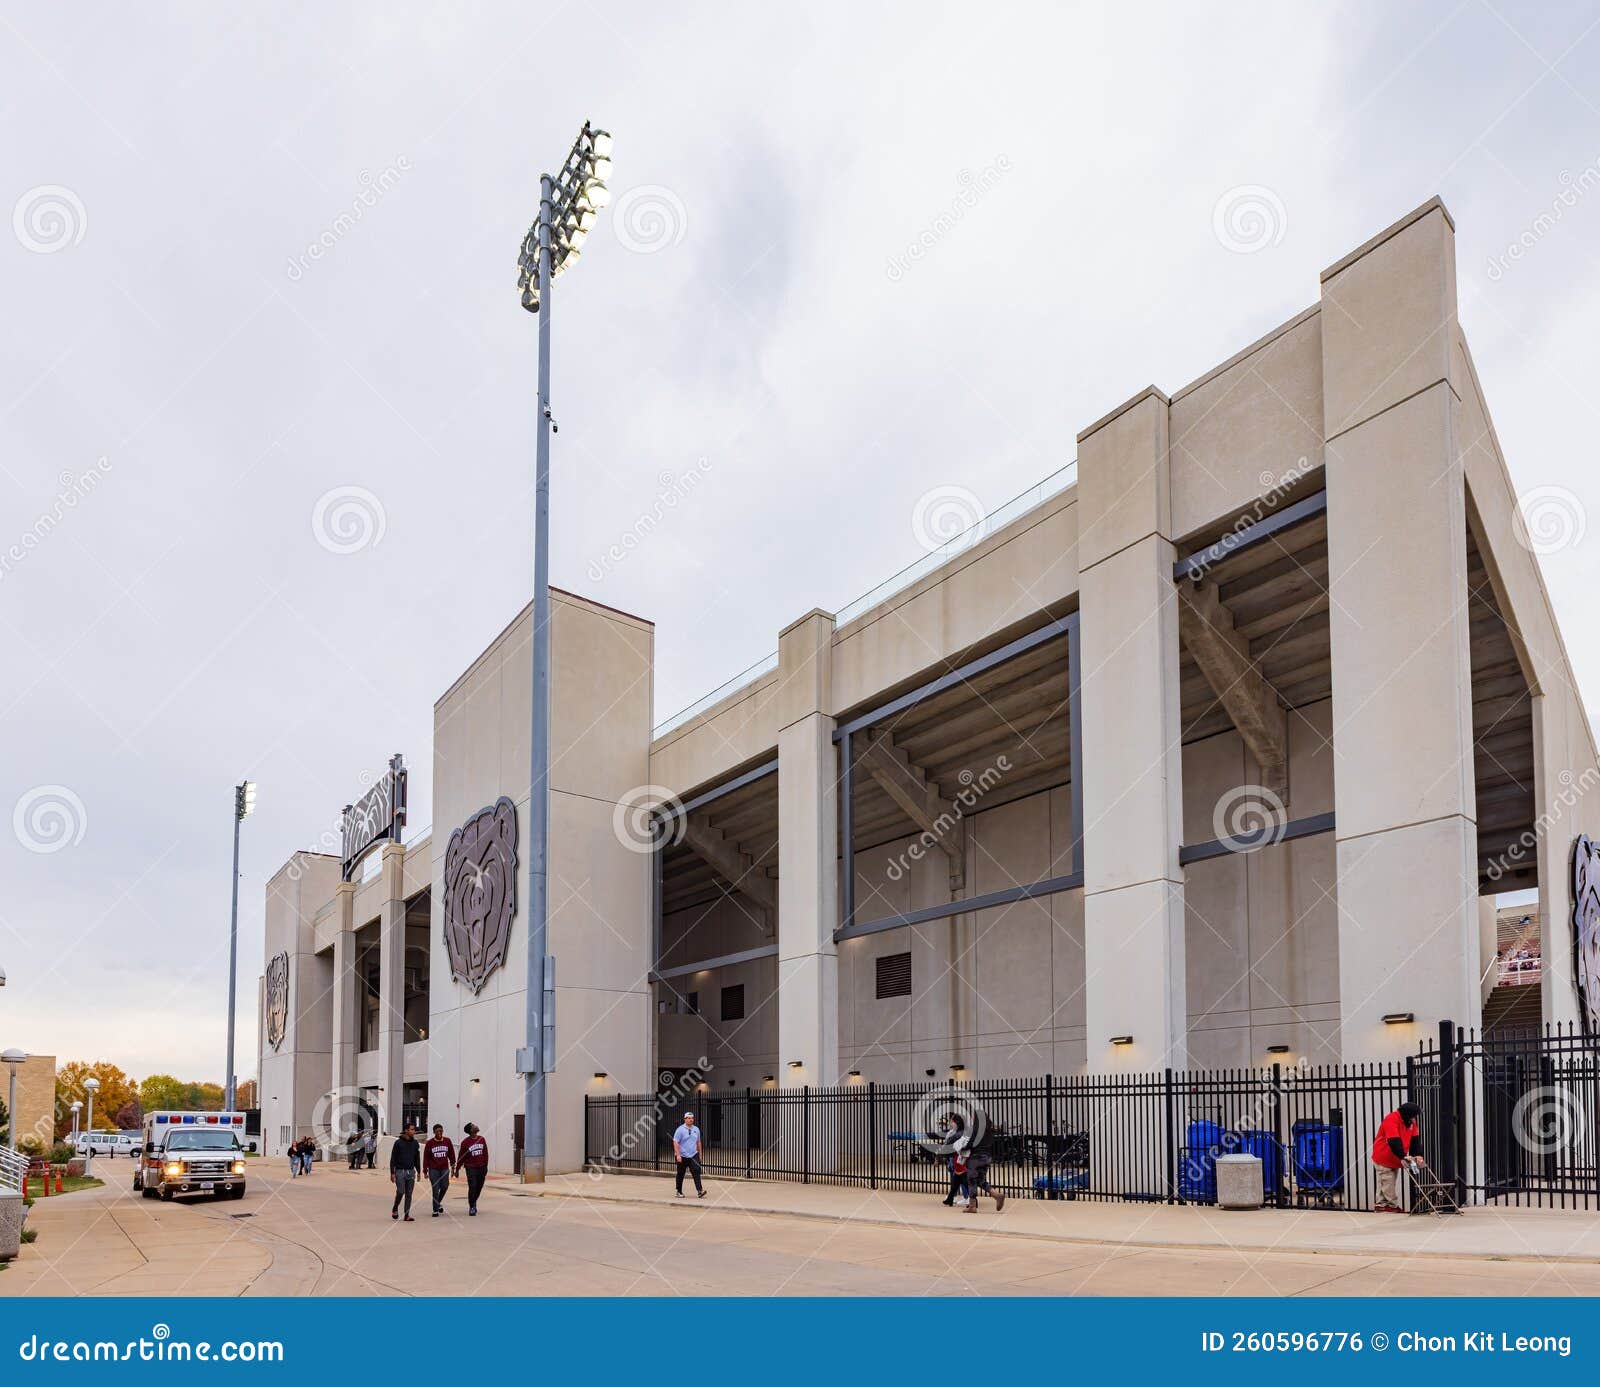 Top 104+ Images robert w. plaster stadium photos Latest